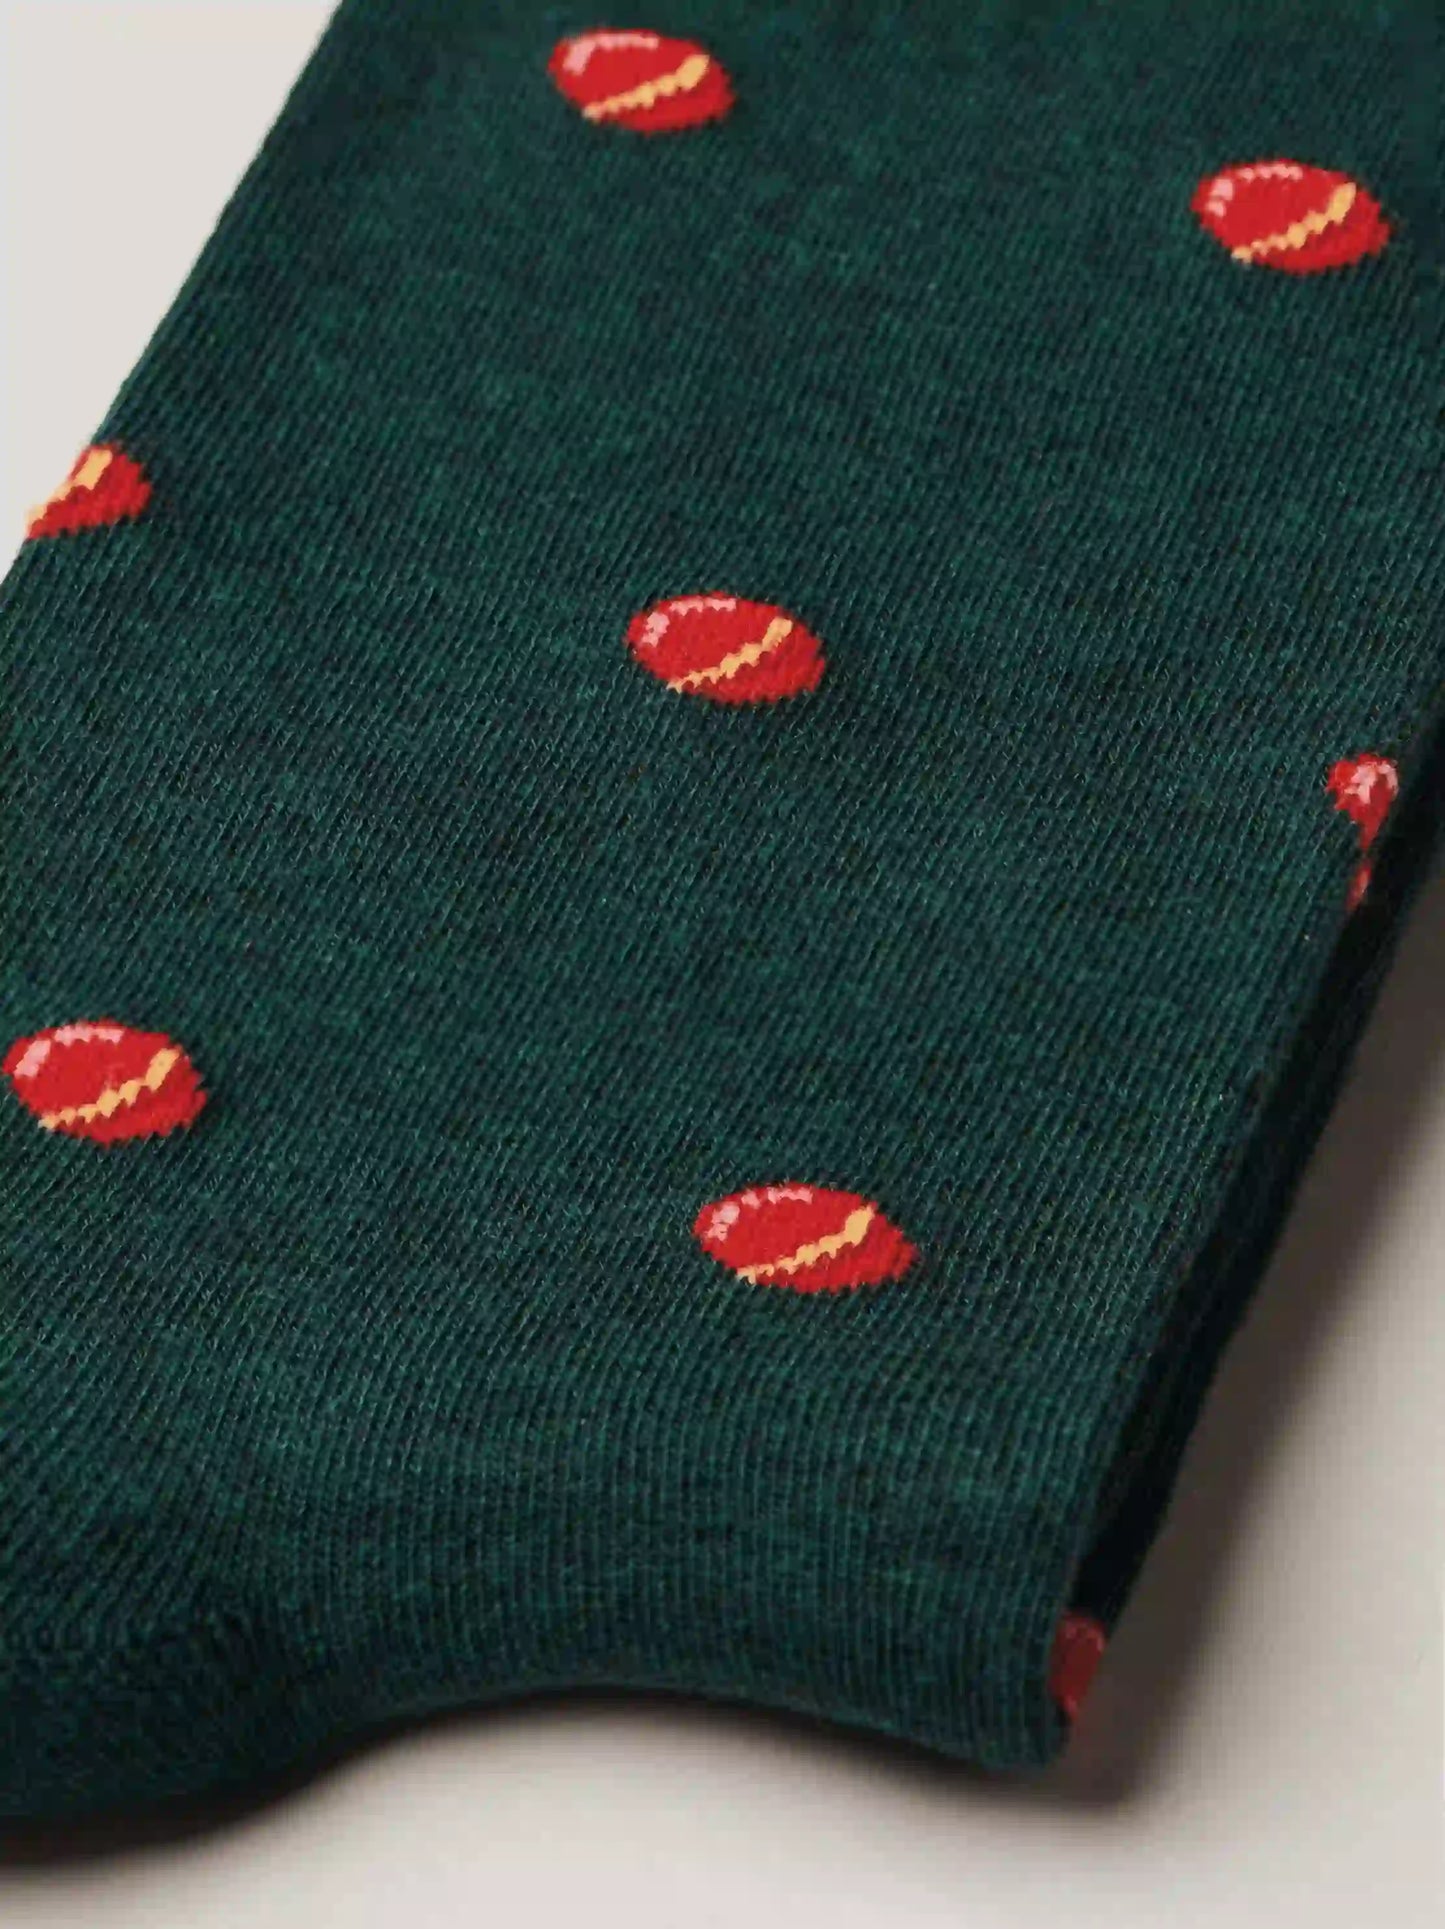 The Cricket Socks Gift Box